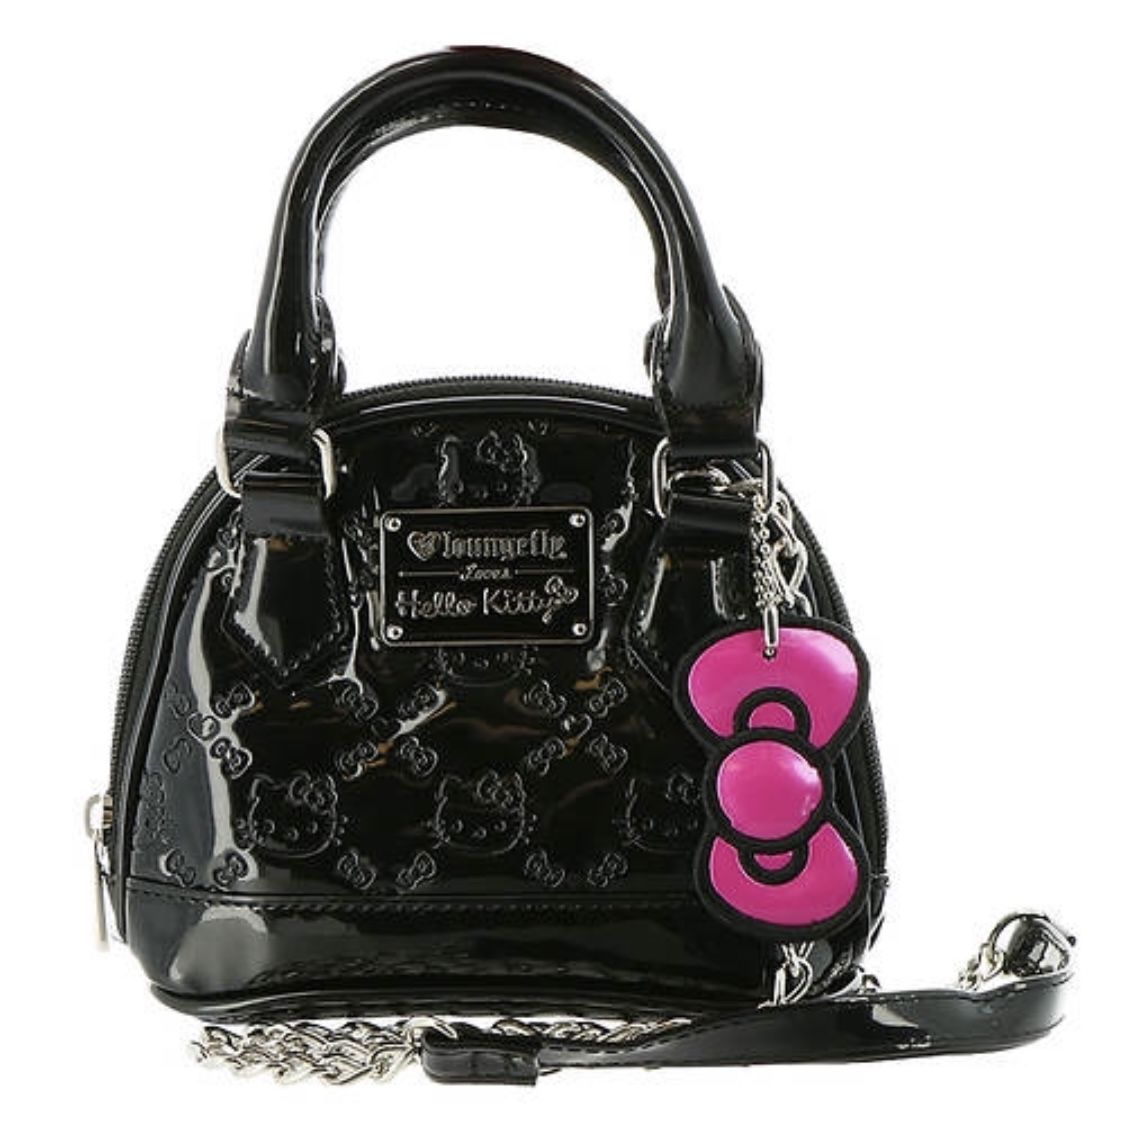 Hello Kitty x Loungefly Black Embossed Micro Dome Handbag Purse Bag BRAND NEW